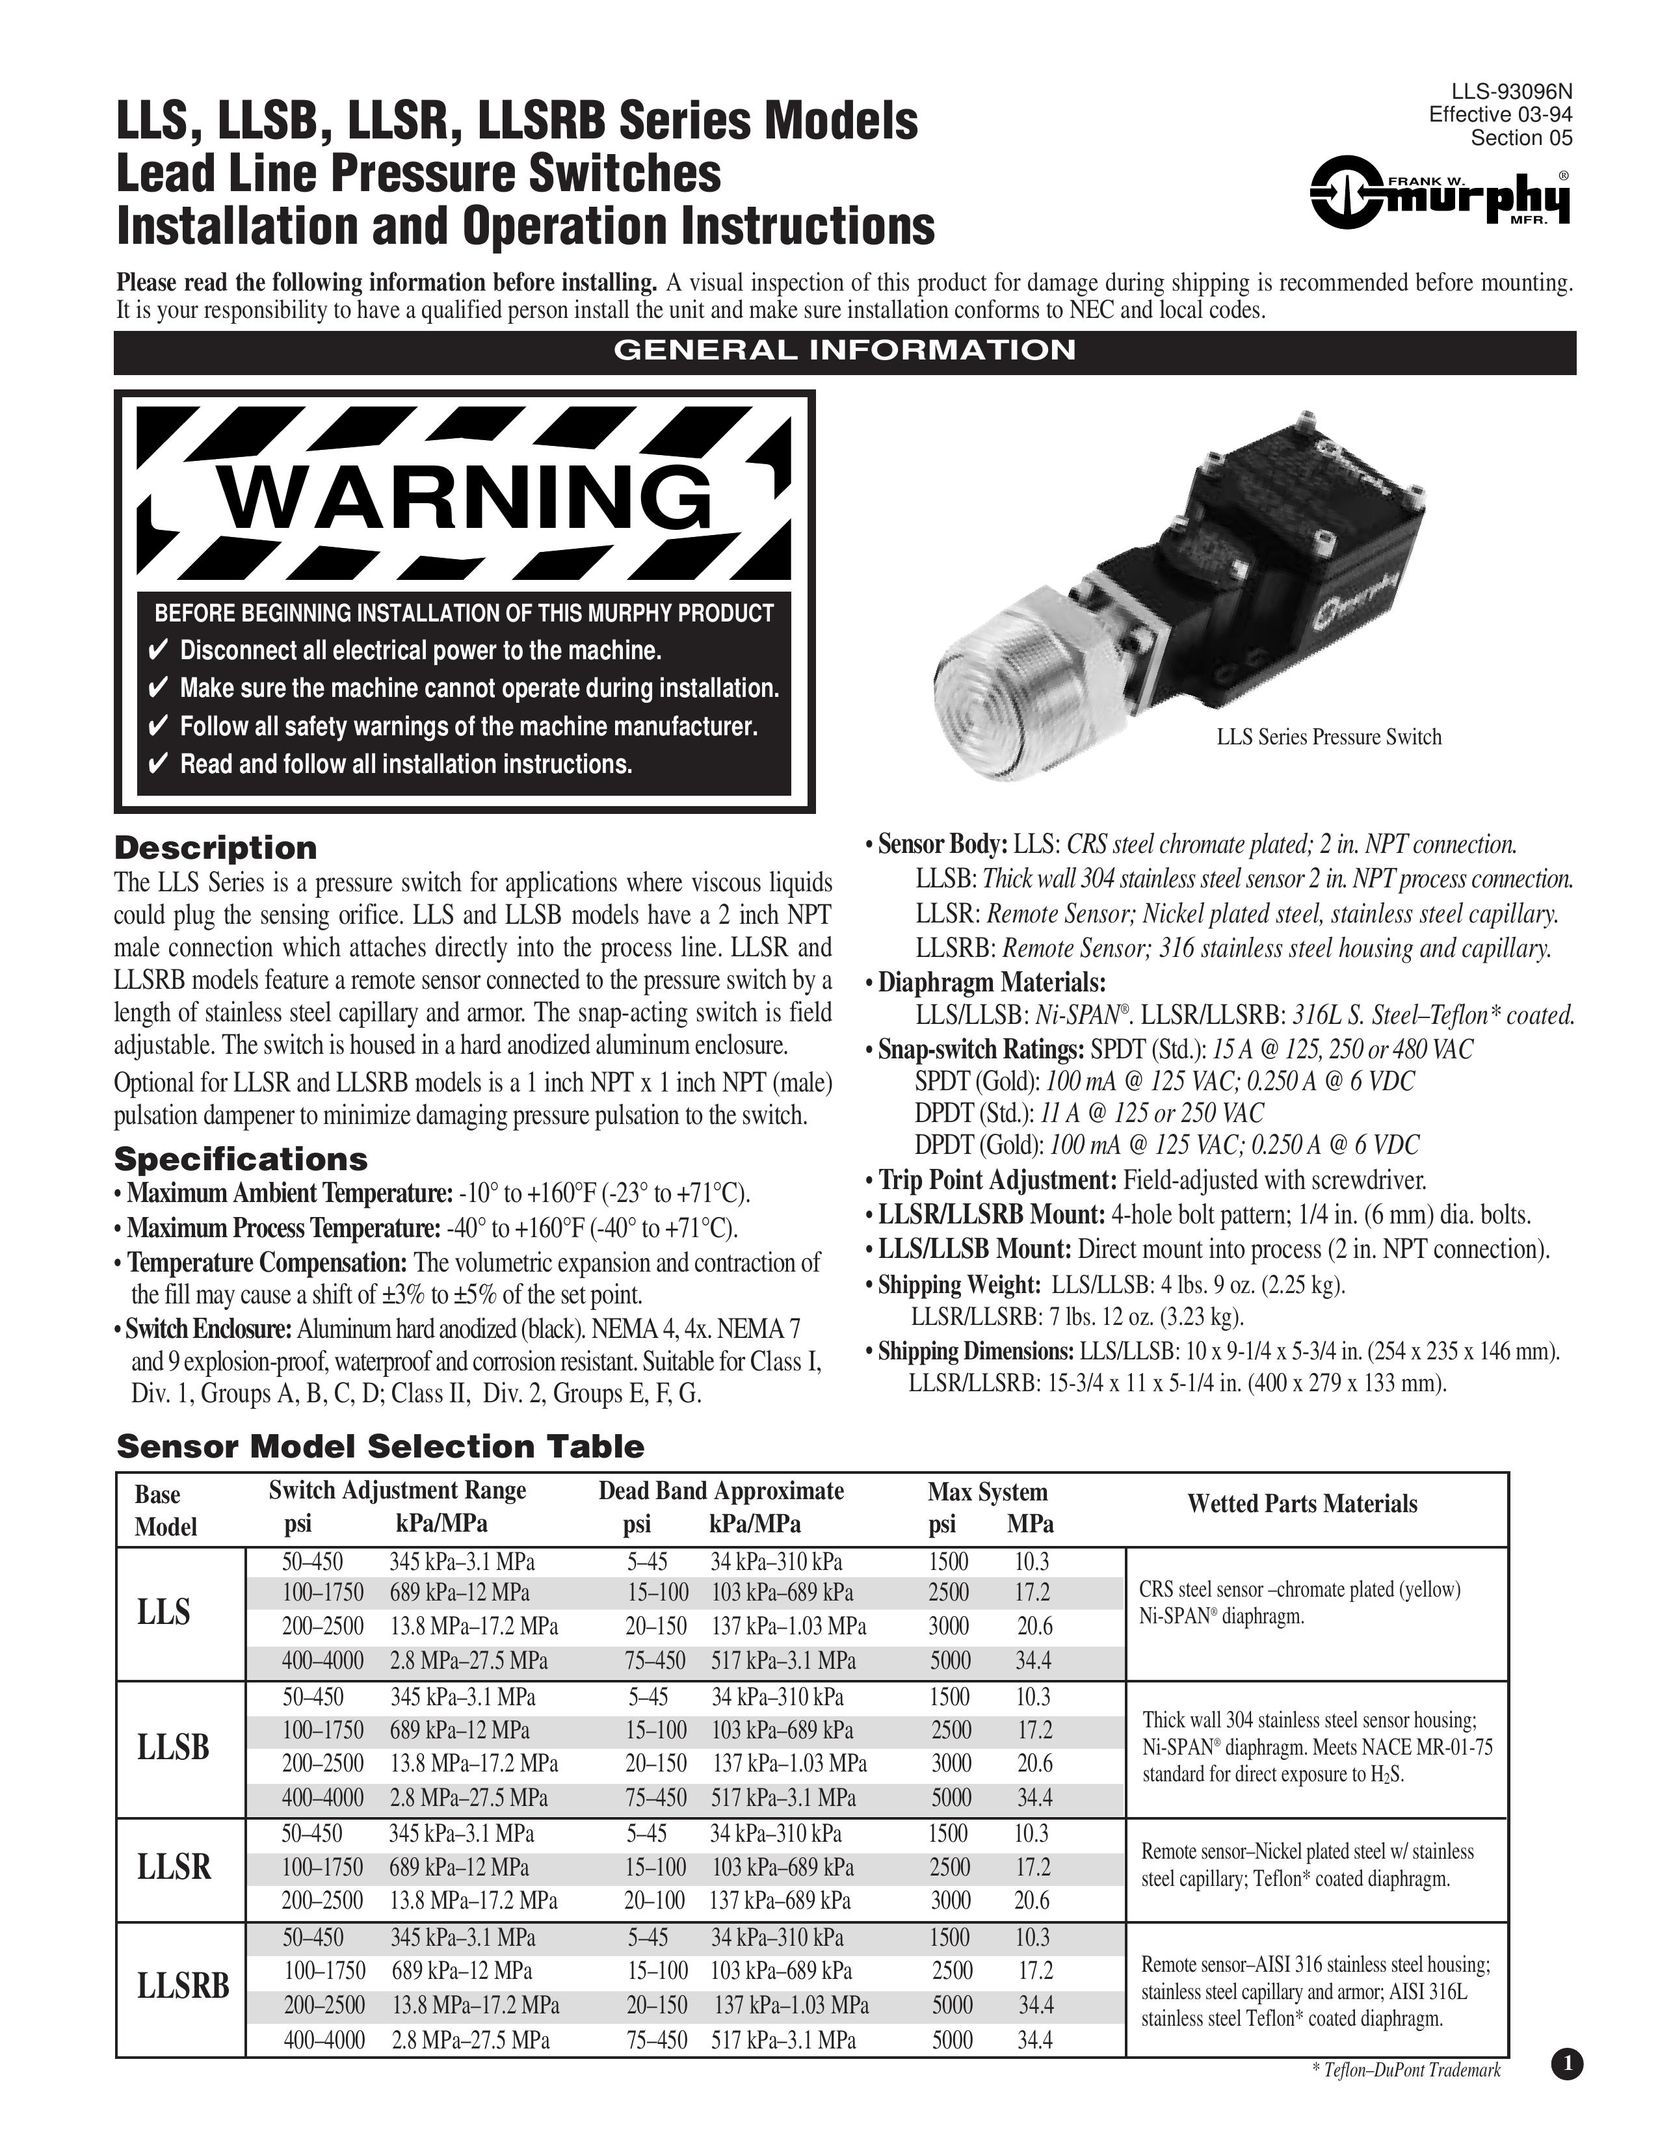 Murphy LLSRB Series Switch User Manual